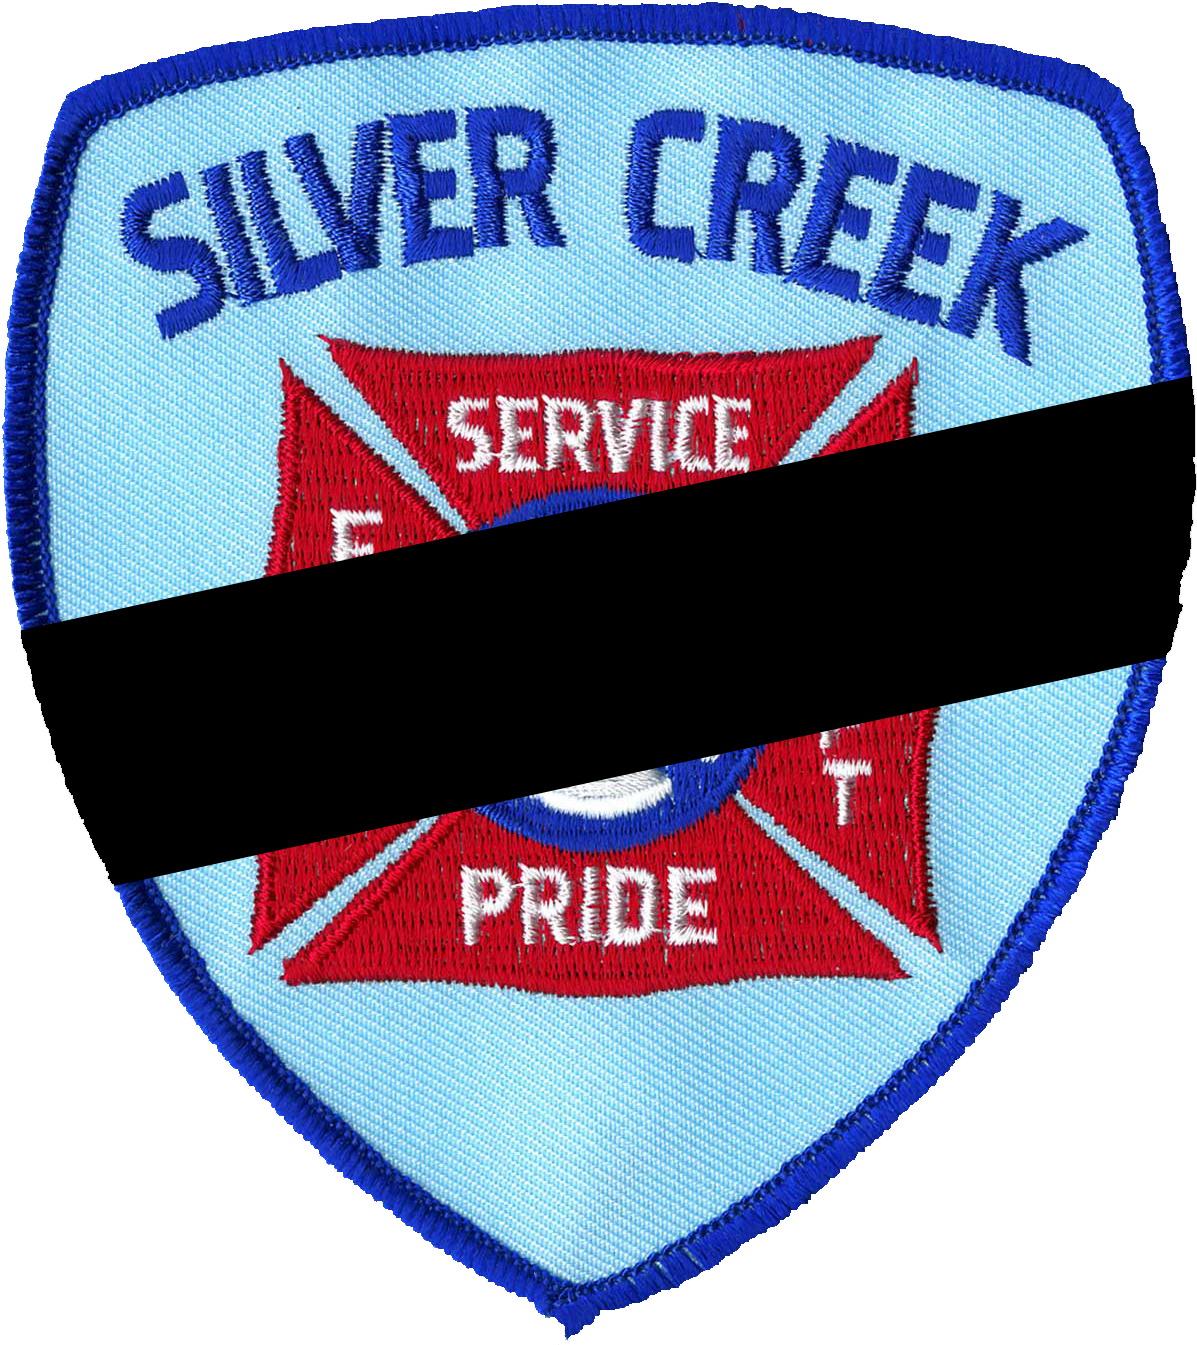 Silver Creek Fire Department (1269x1369)